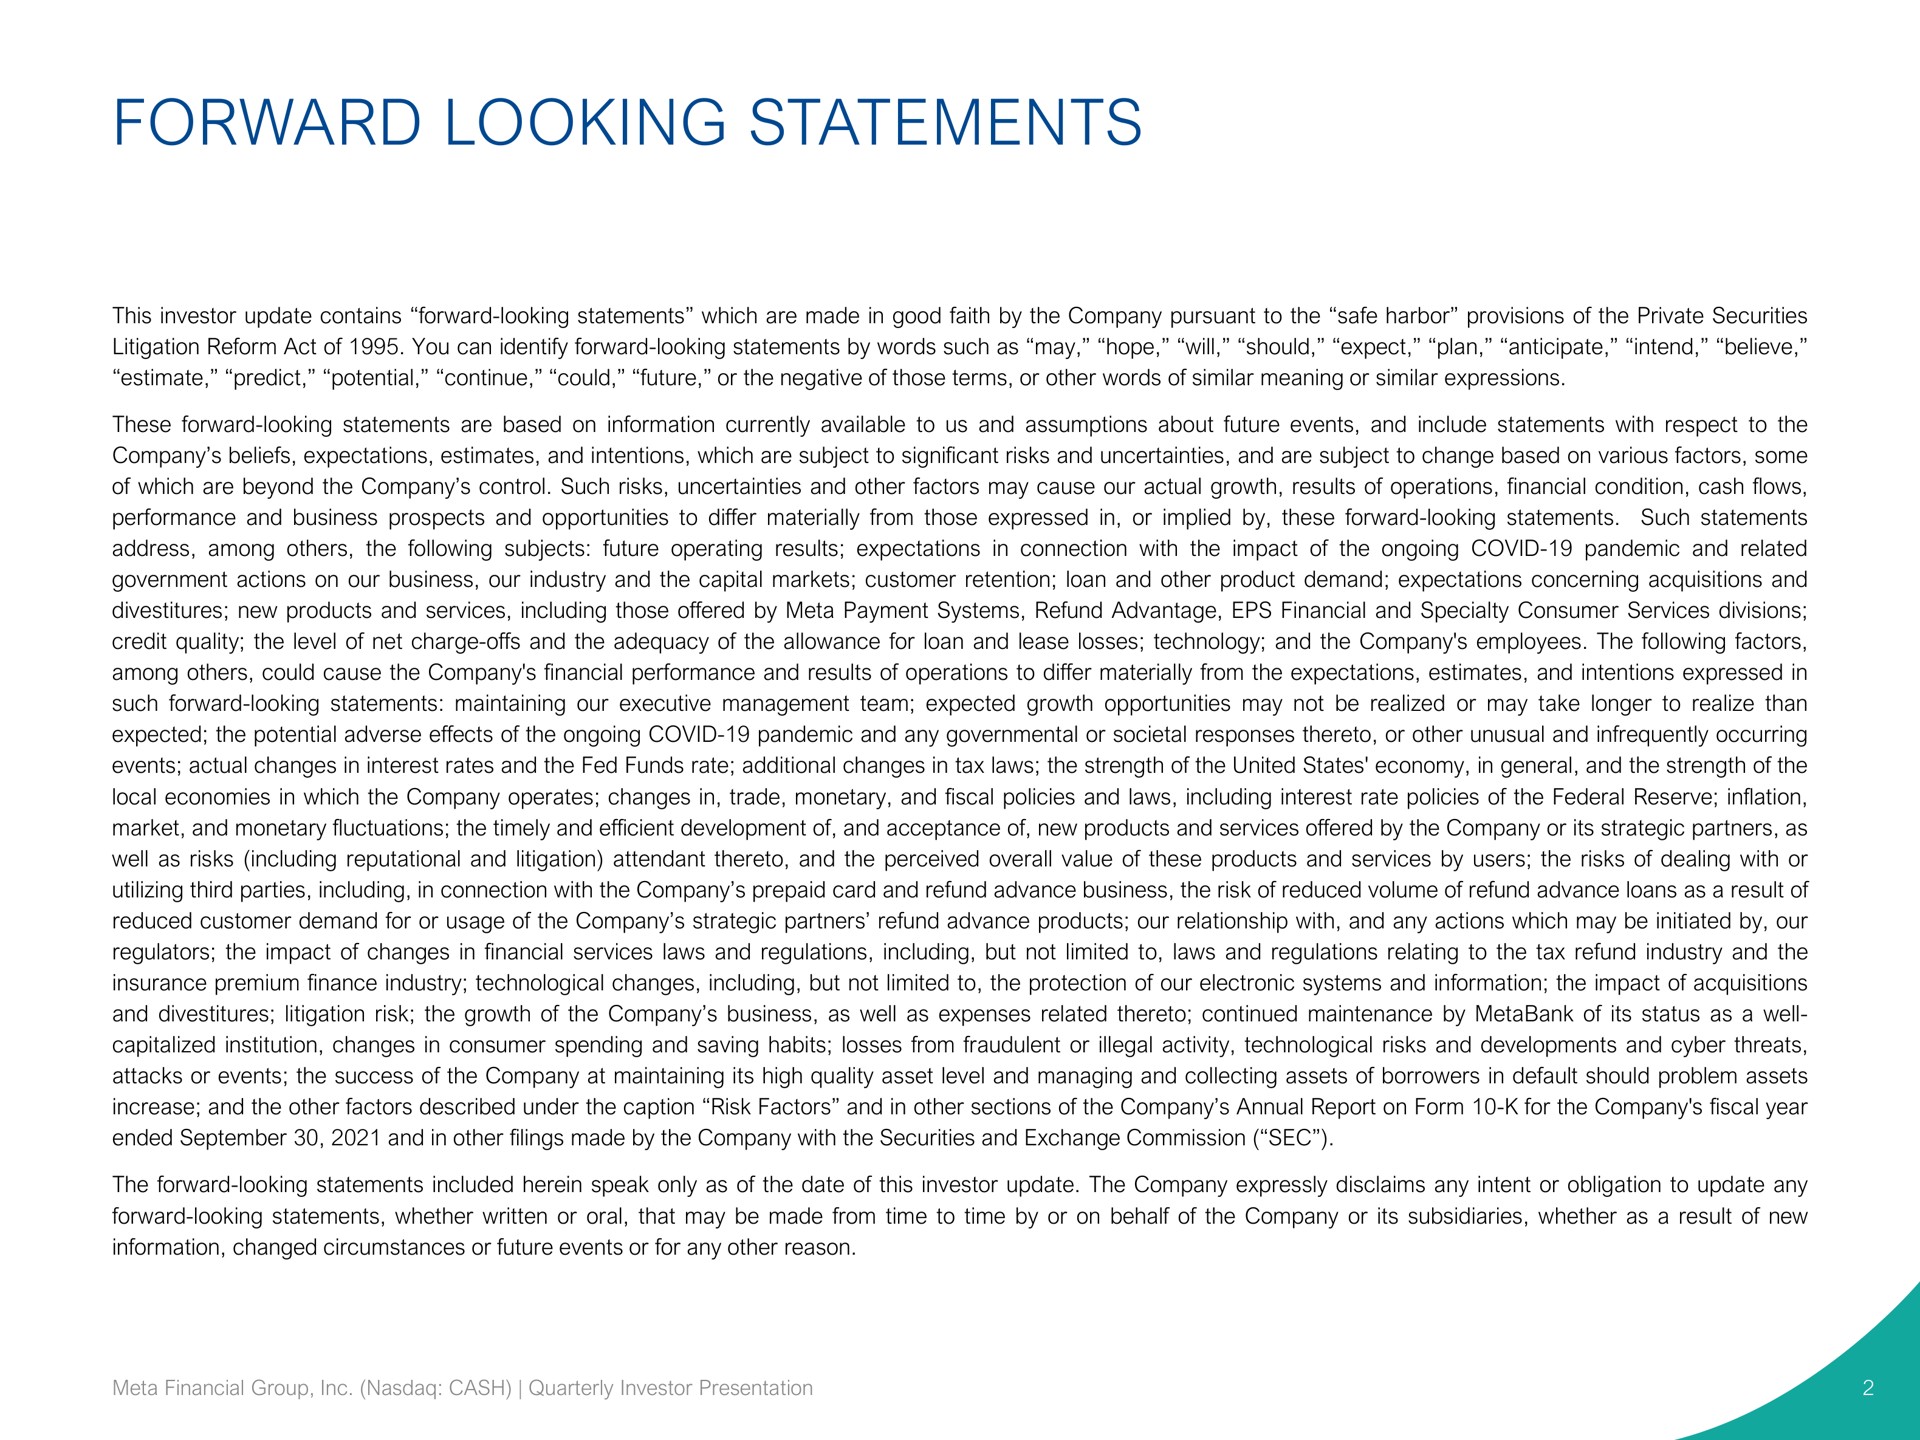 forward looking statements | Pathward Financial